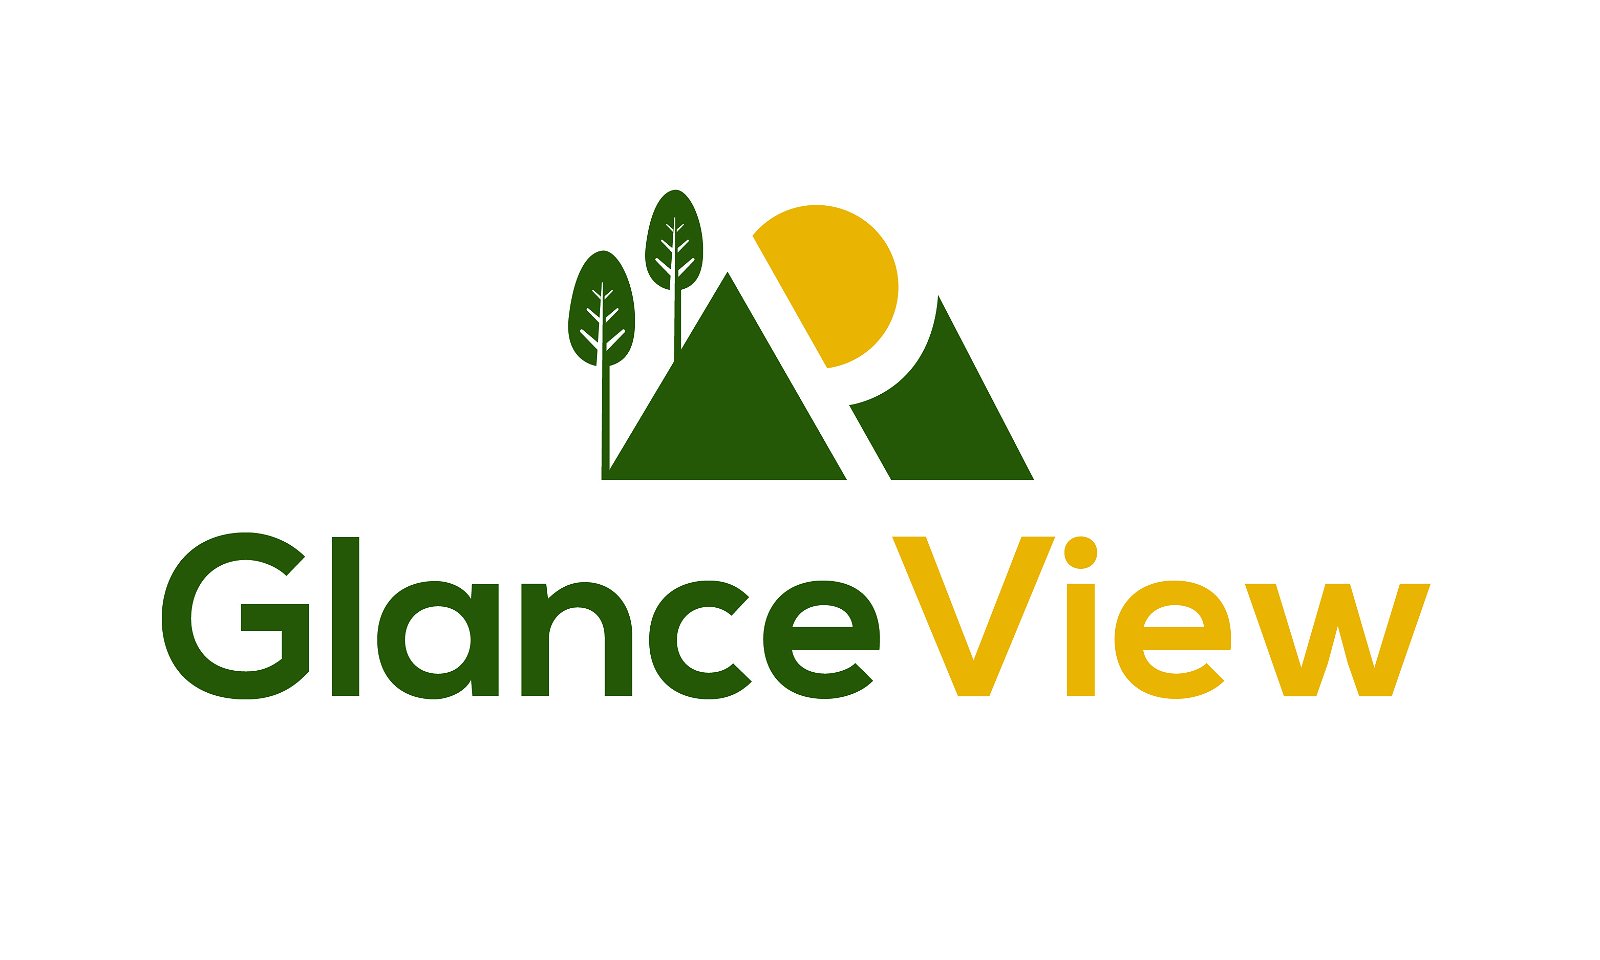 GlanceView.com - Creative brandable domain for sale